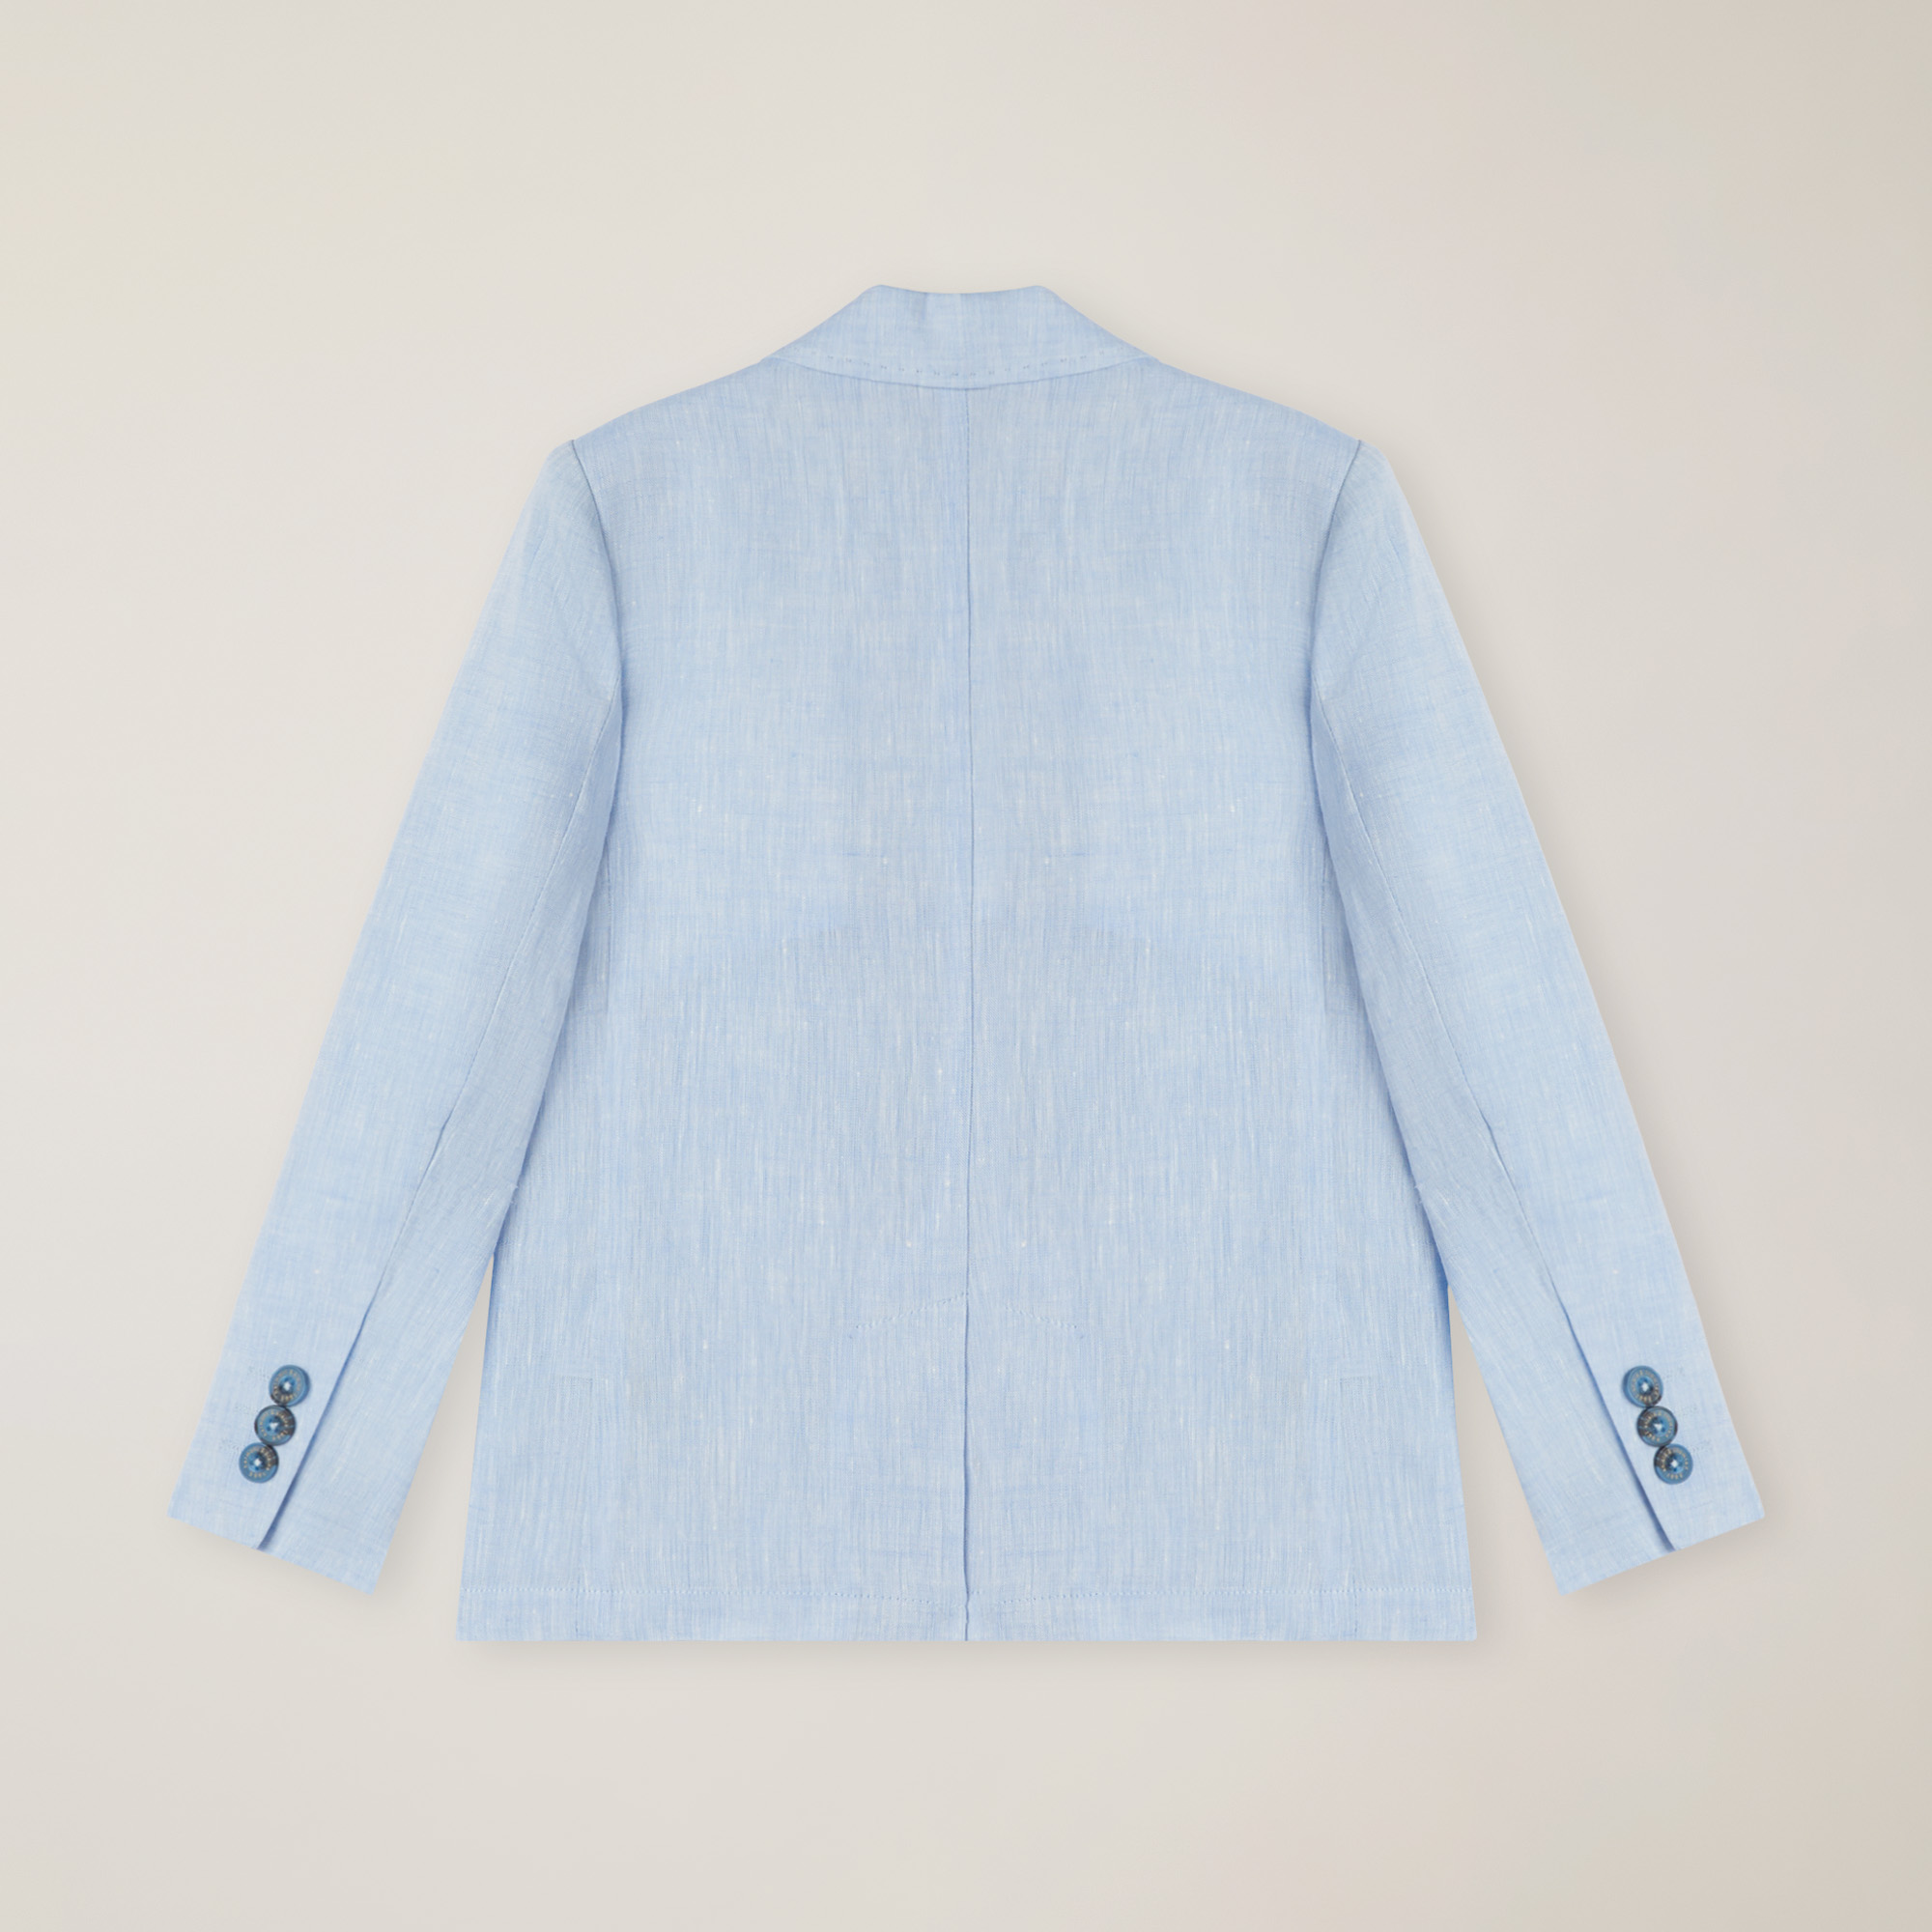 Melange linen jacket with Dachshund pin